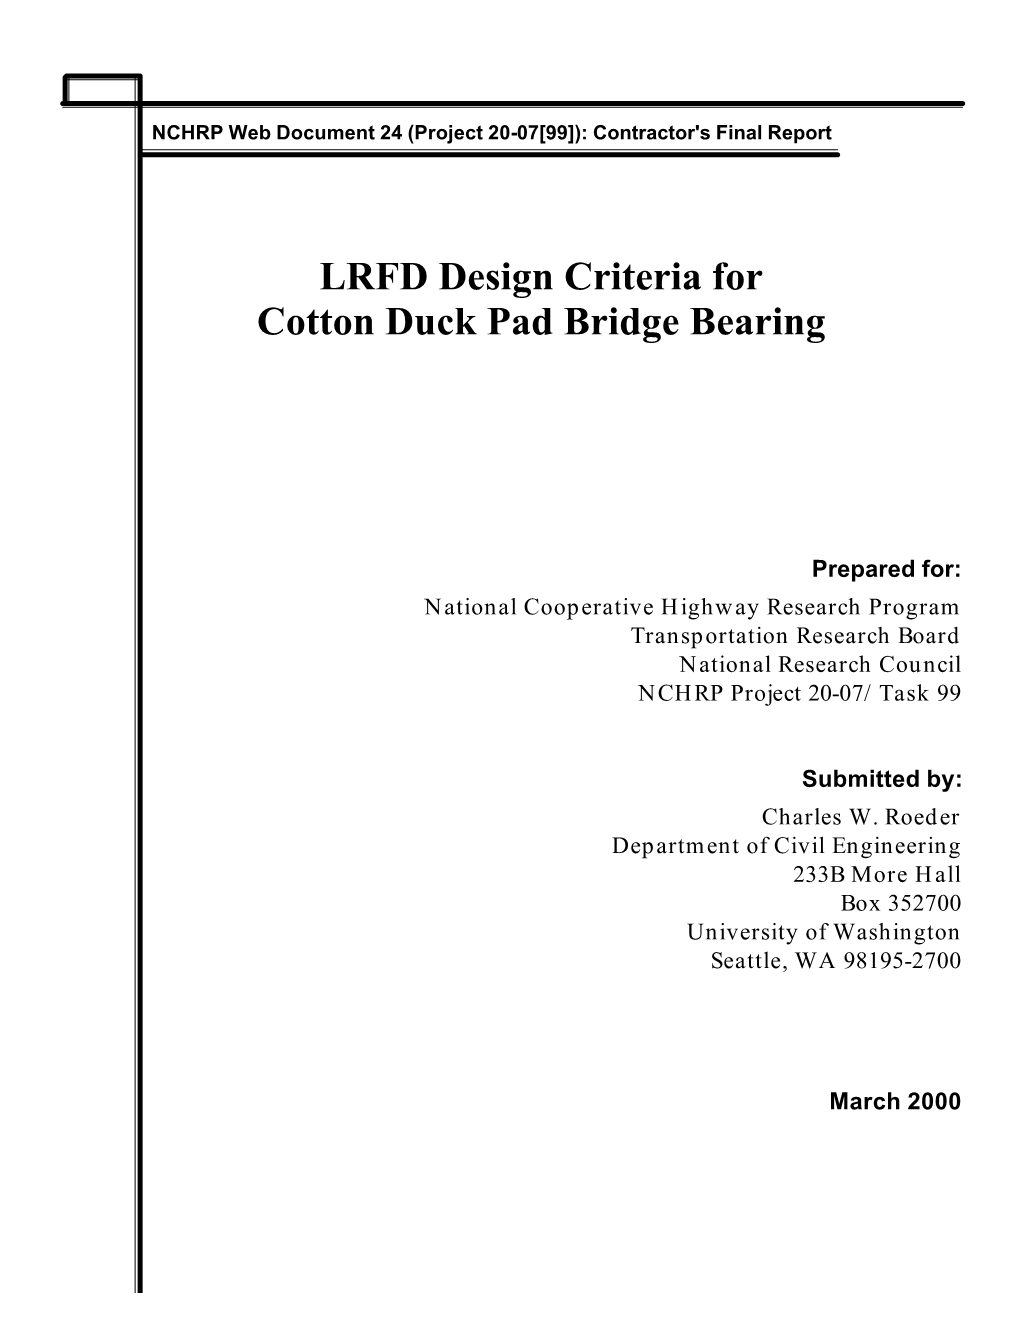 LRFD Design Criteria for Cotton Duck Pad Bridge Bearing